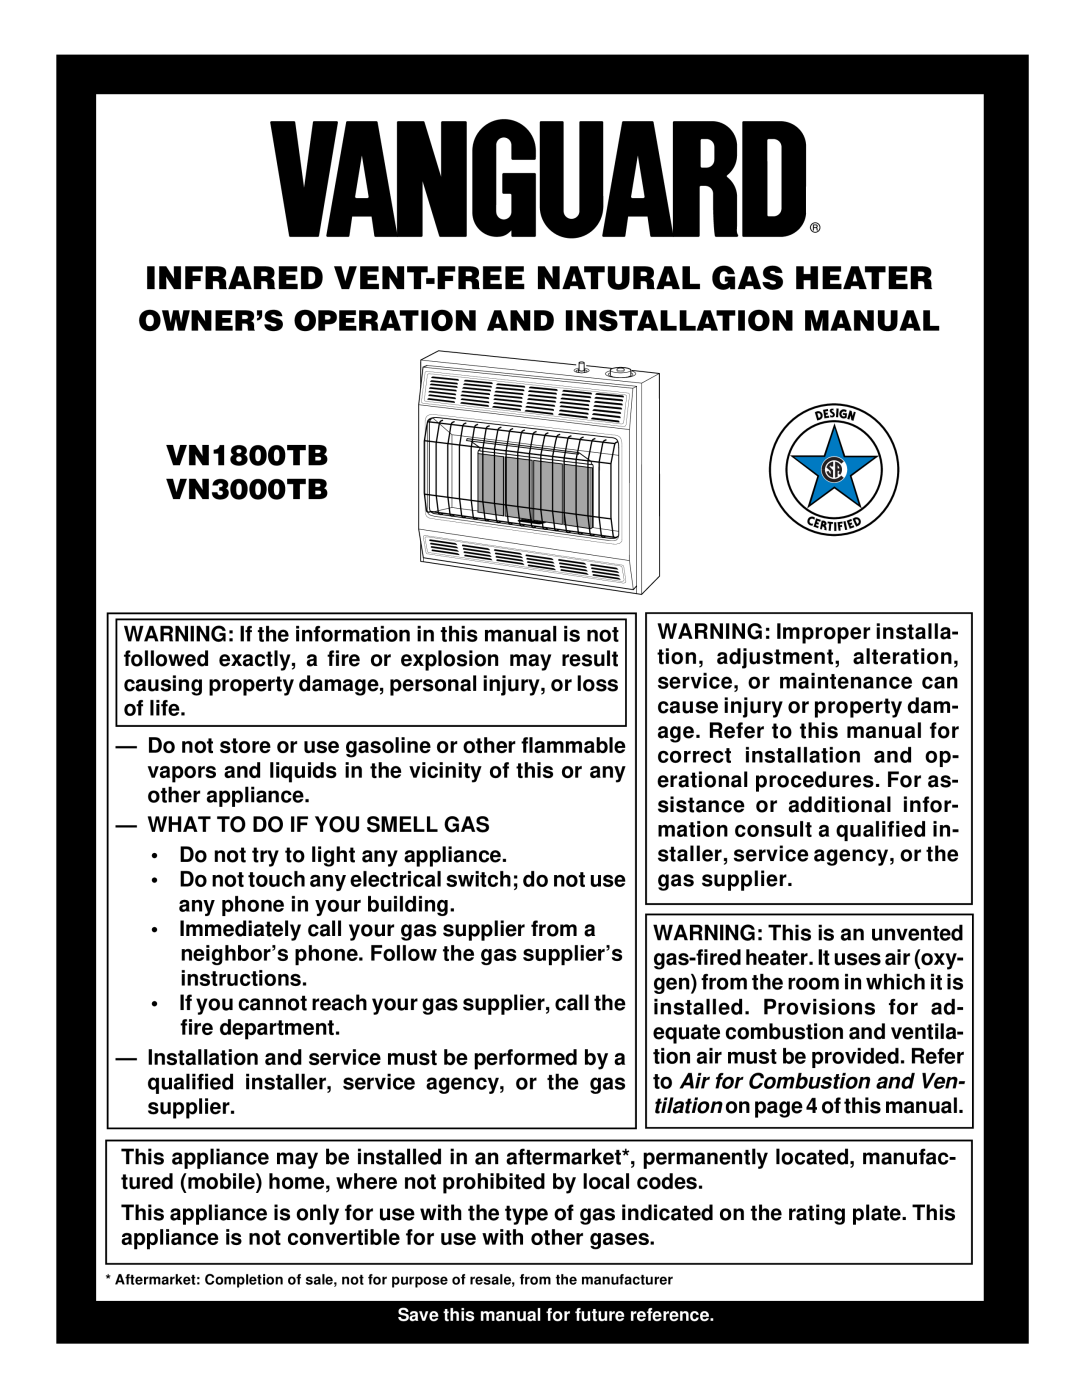 Vanguard Heating installation manual Infrared Vent-Freenatural Gas Heater, VN1800TB VN3000TB 